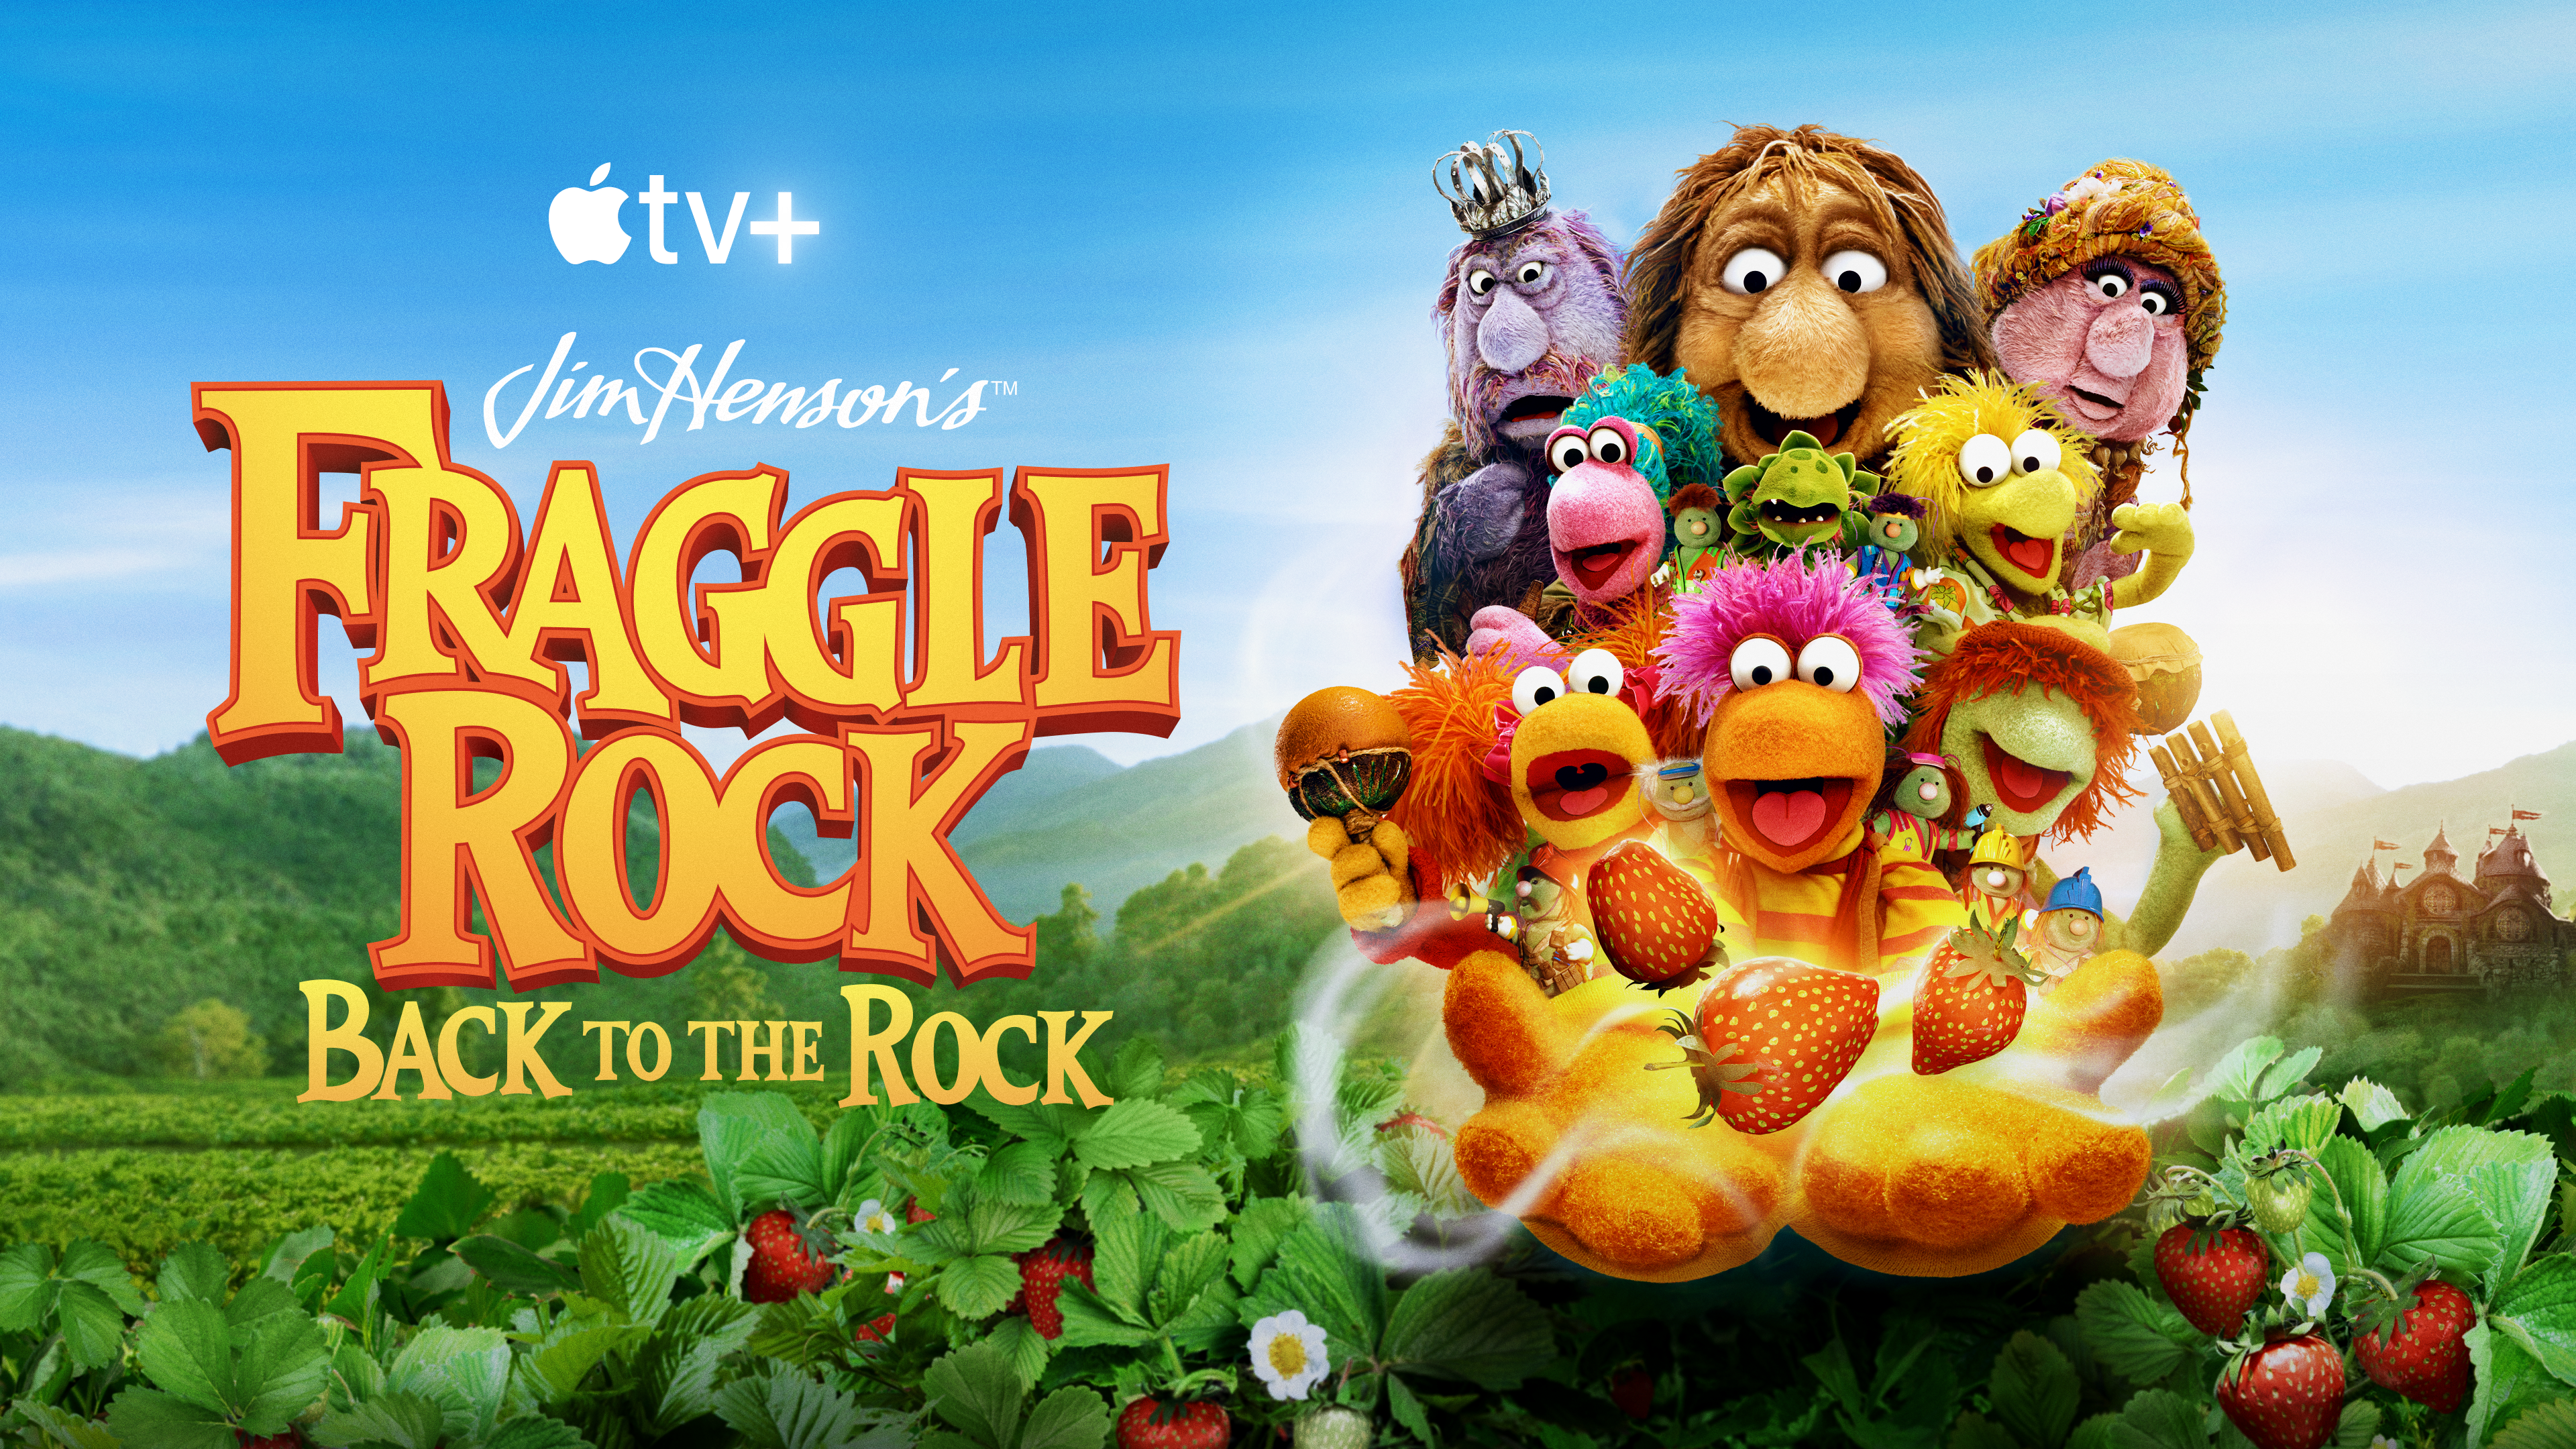 Fraggle Rock: Back to the Rock Season 2